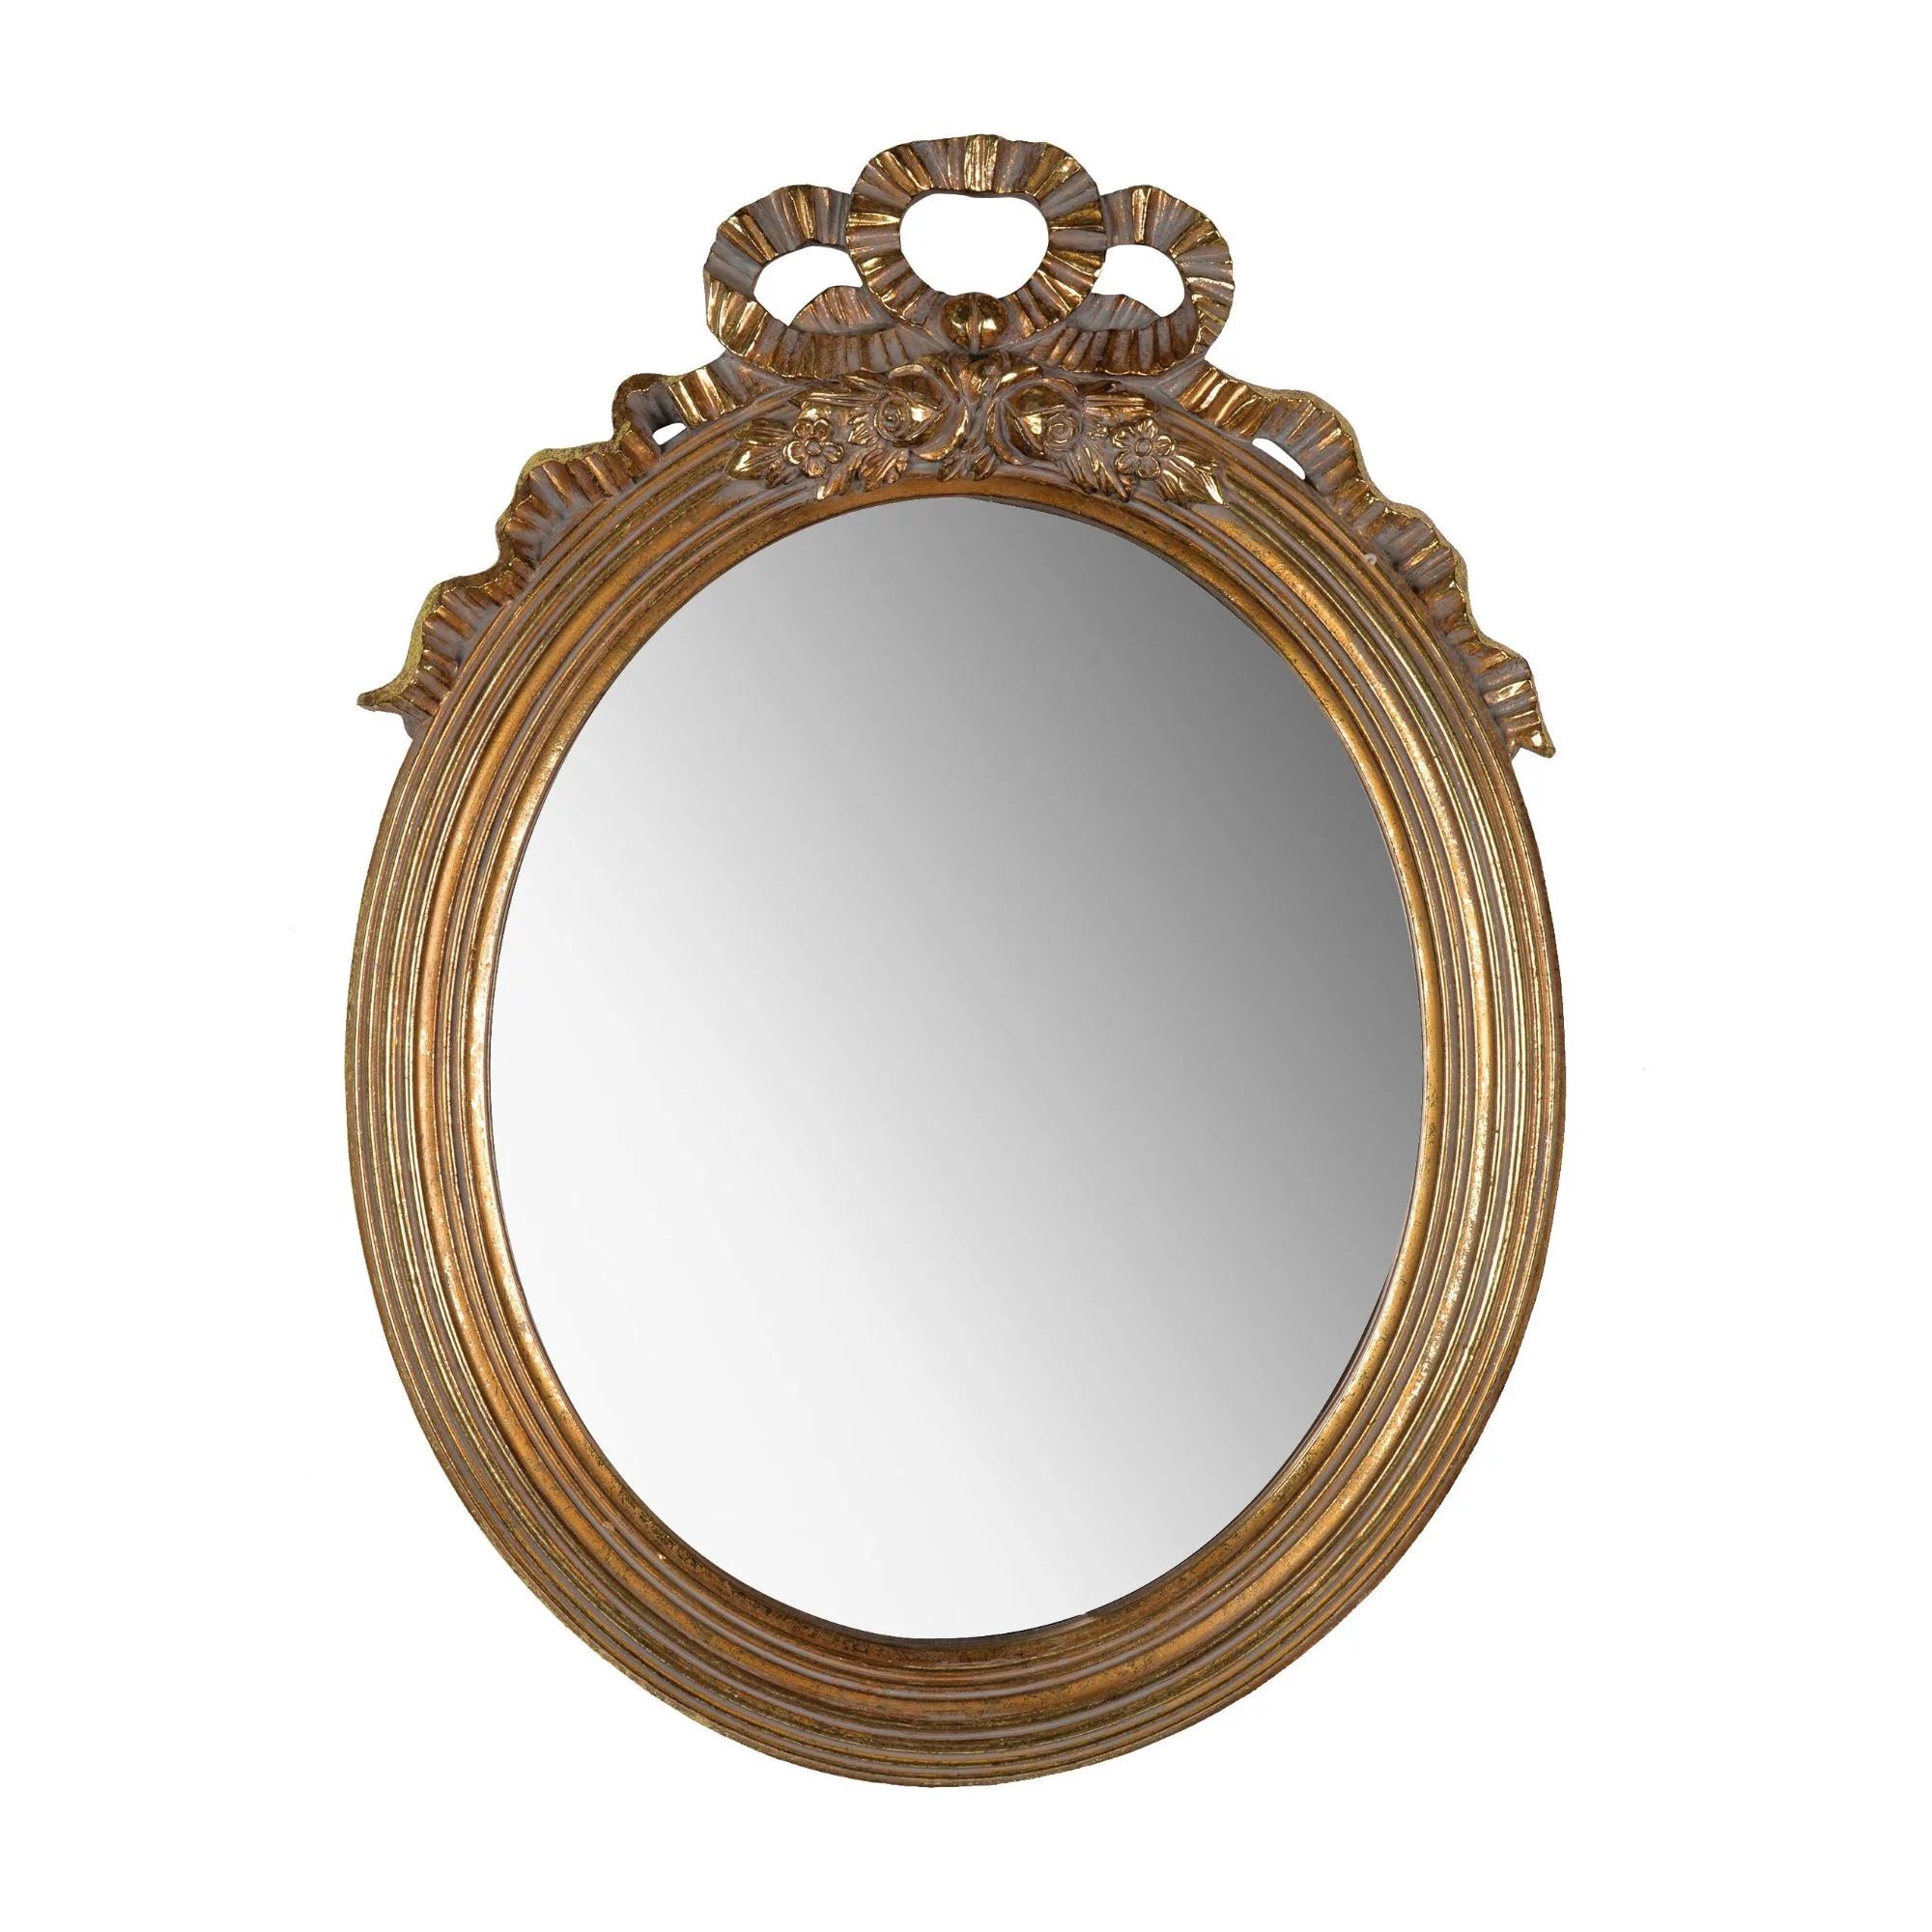 18.75" Gold Leaf Vintage Style Decorative Framed Oval Shaped Wall Mirror | Walmart (US)